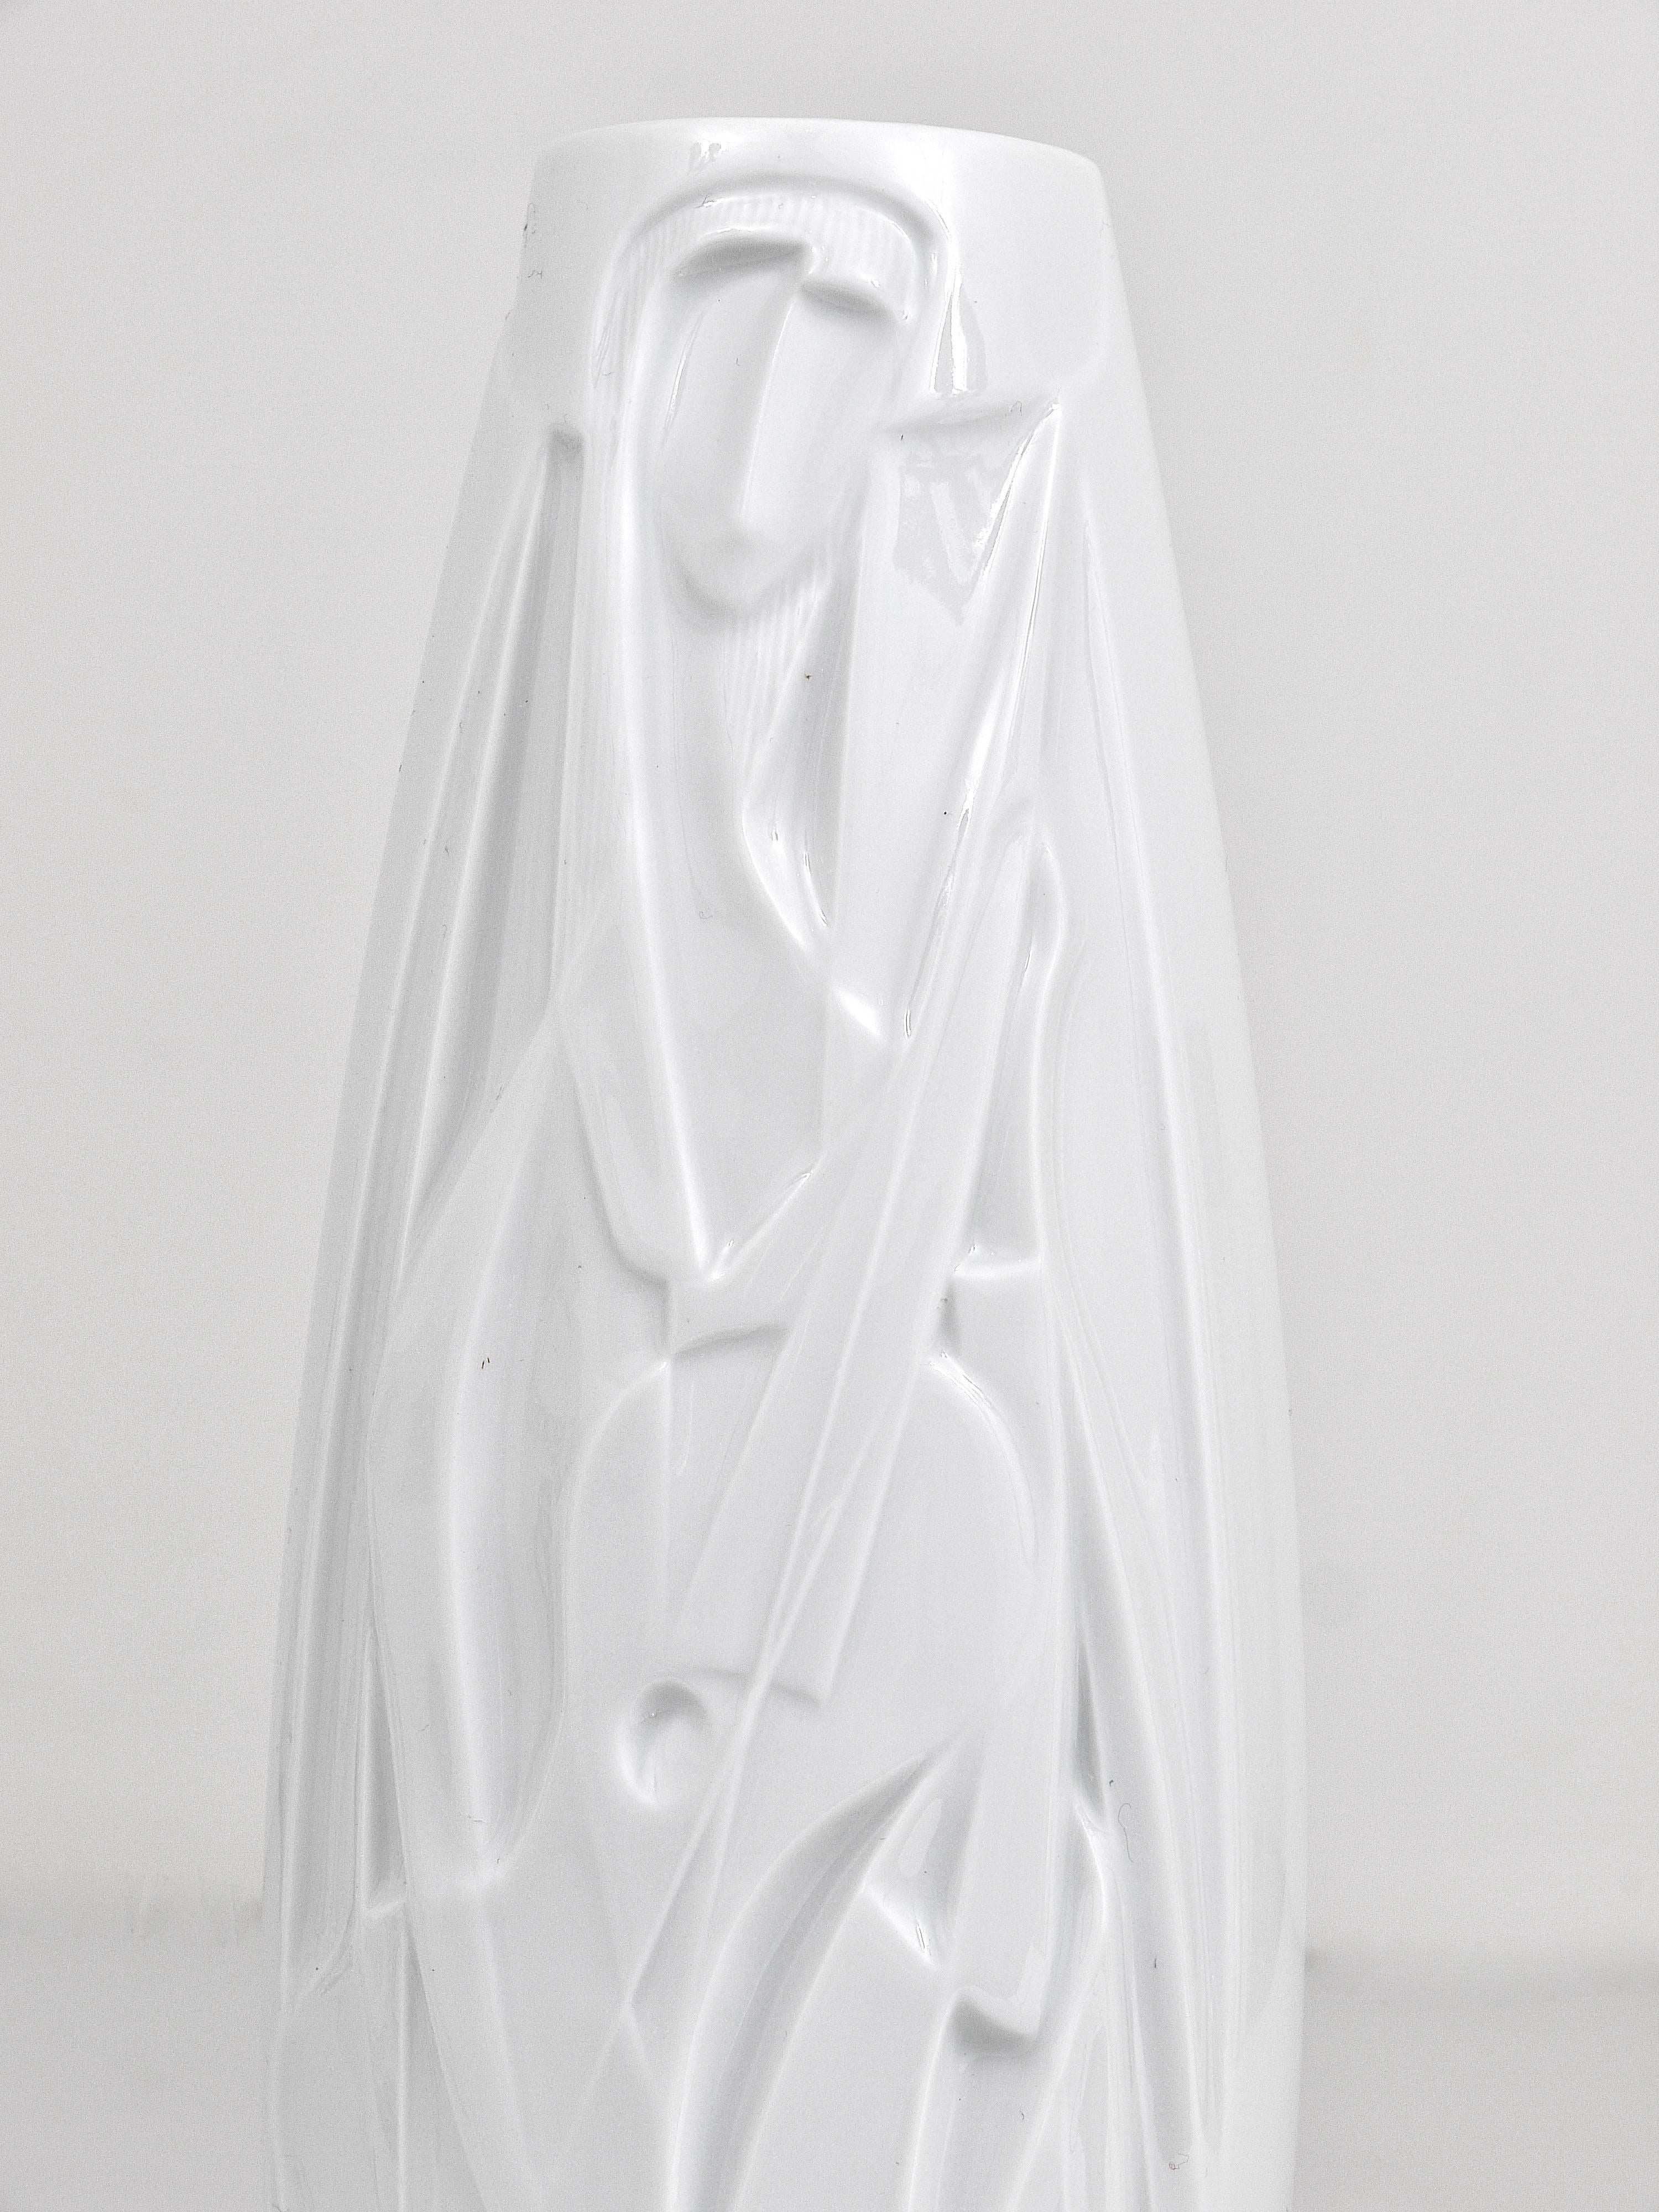 German Cuno Fischer Rosenthal Studio-Linie White Relief Op Art Porcelain Vase, 1960s For Sale